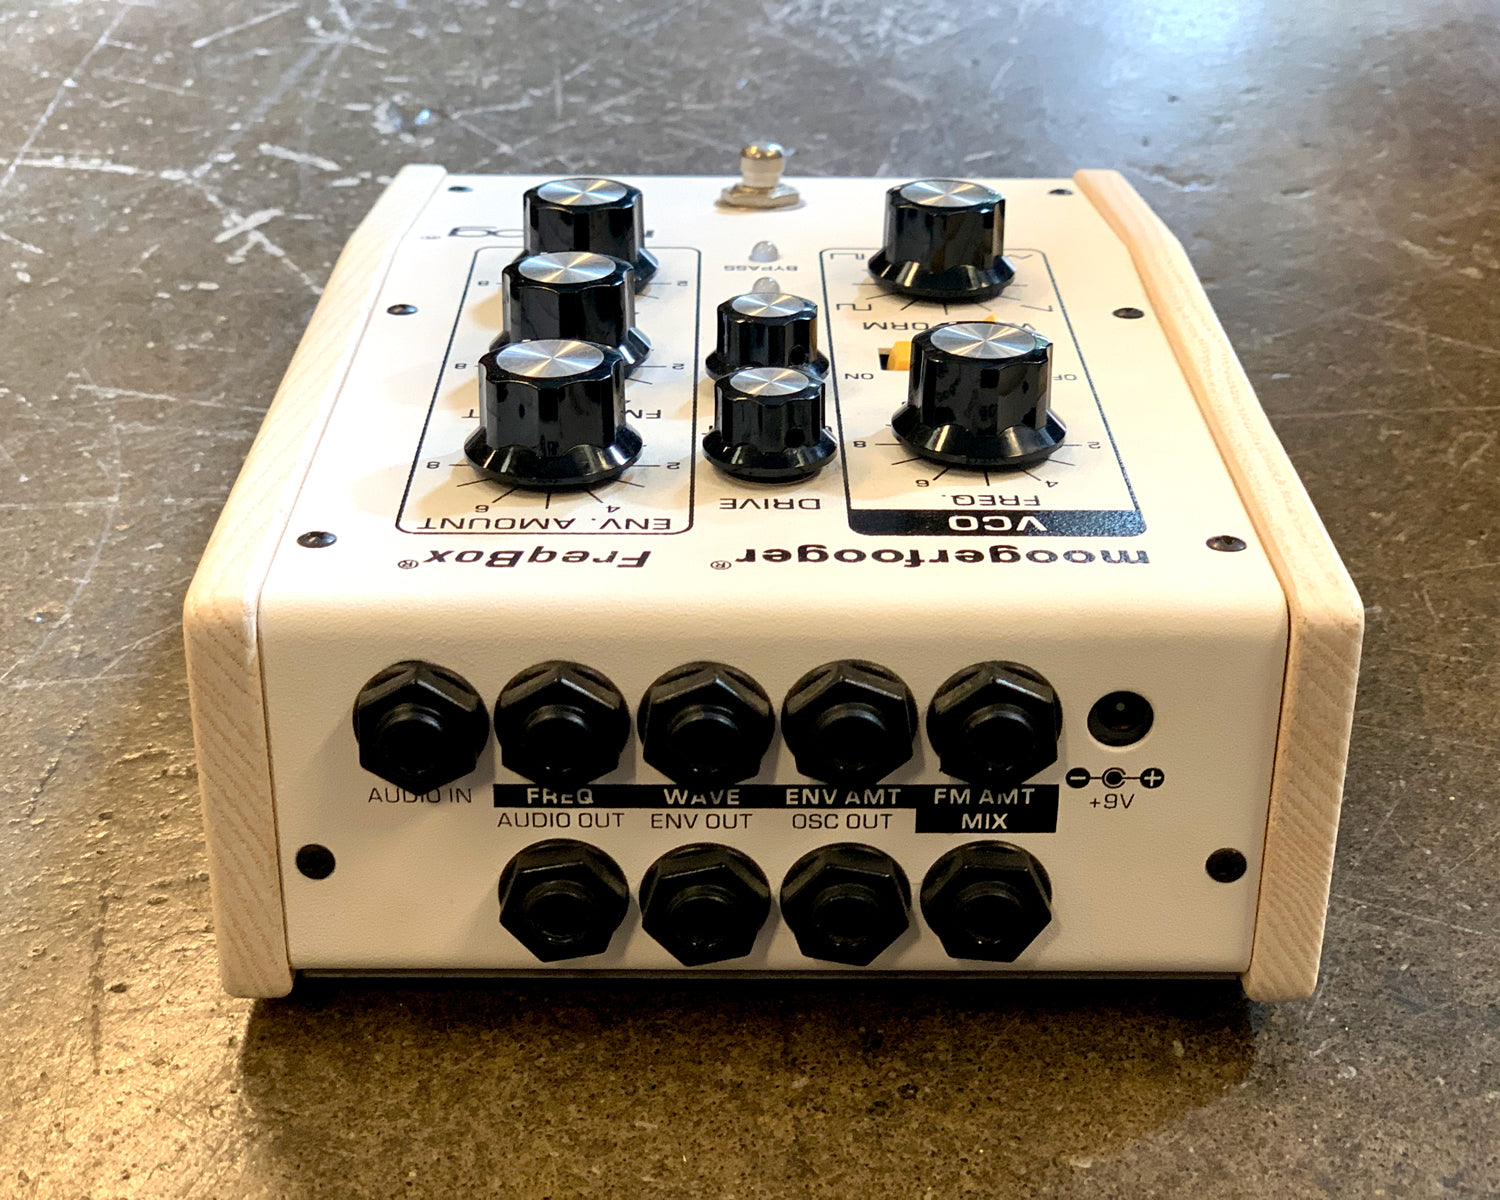 Moog Moogerfooger MF-107 Freqbox - White – Found Sound